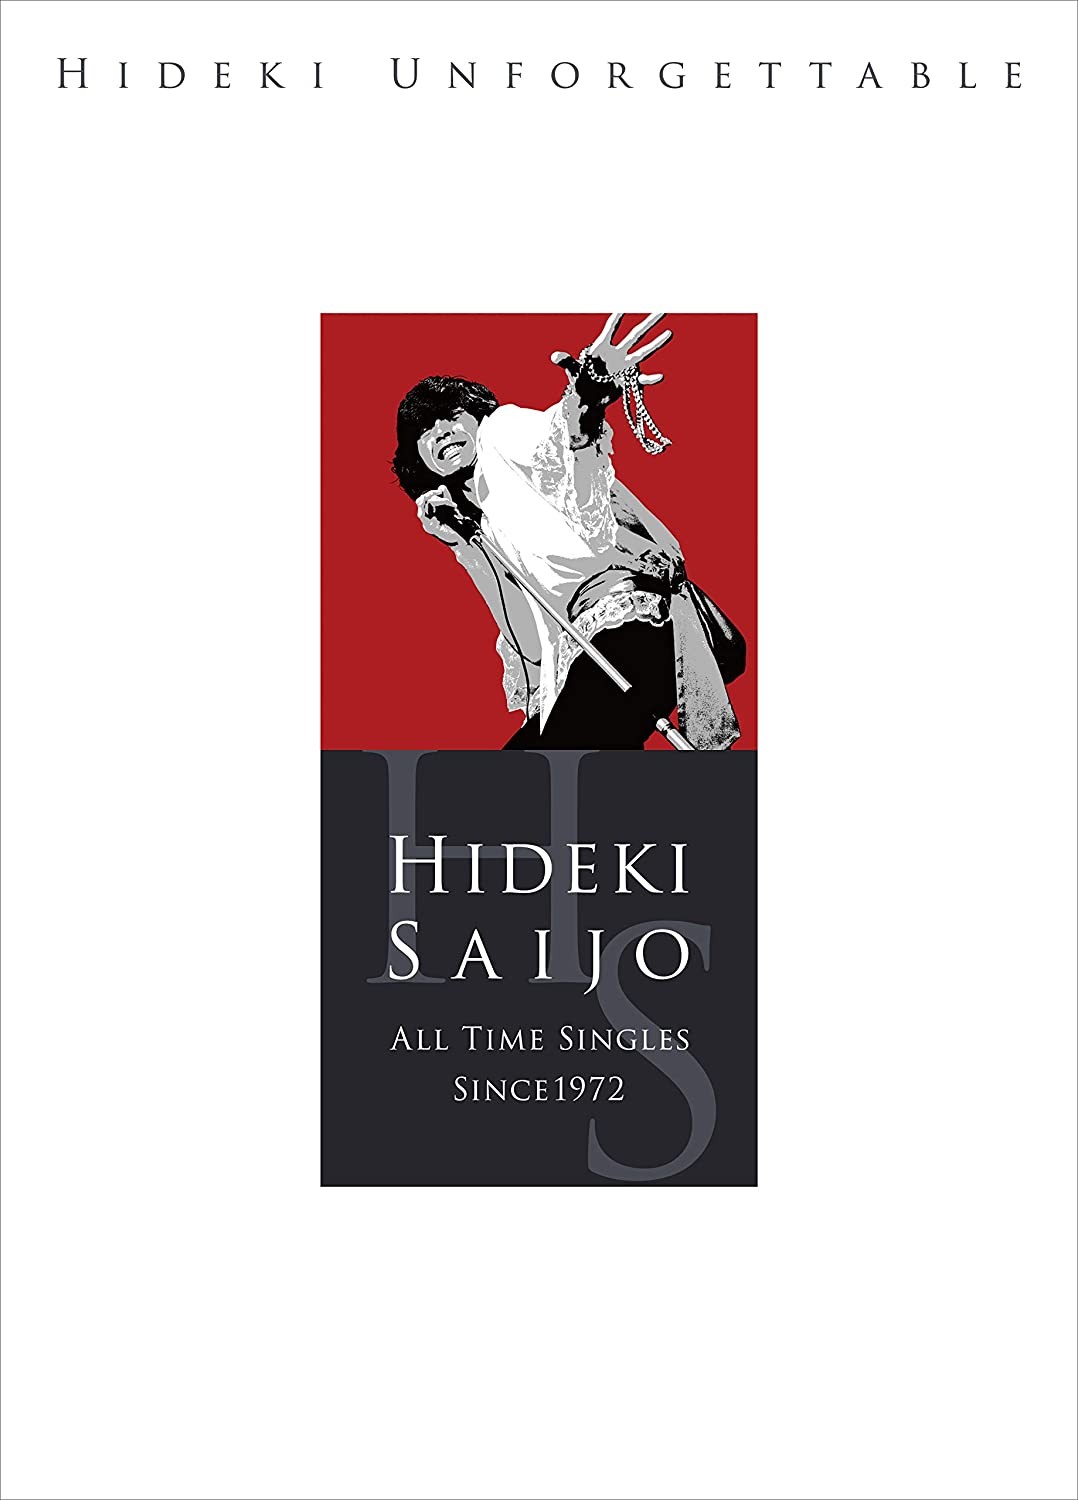 西城秀樹 (Hideki Saijo) – HIDEKI UNFORGETTABLE-HIDEKI SAIJO ALL TIME SINGLES SINCE1972 [FLAC + MP3 320 / CD] [2019.05.16]